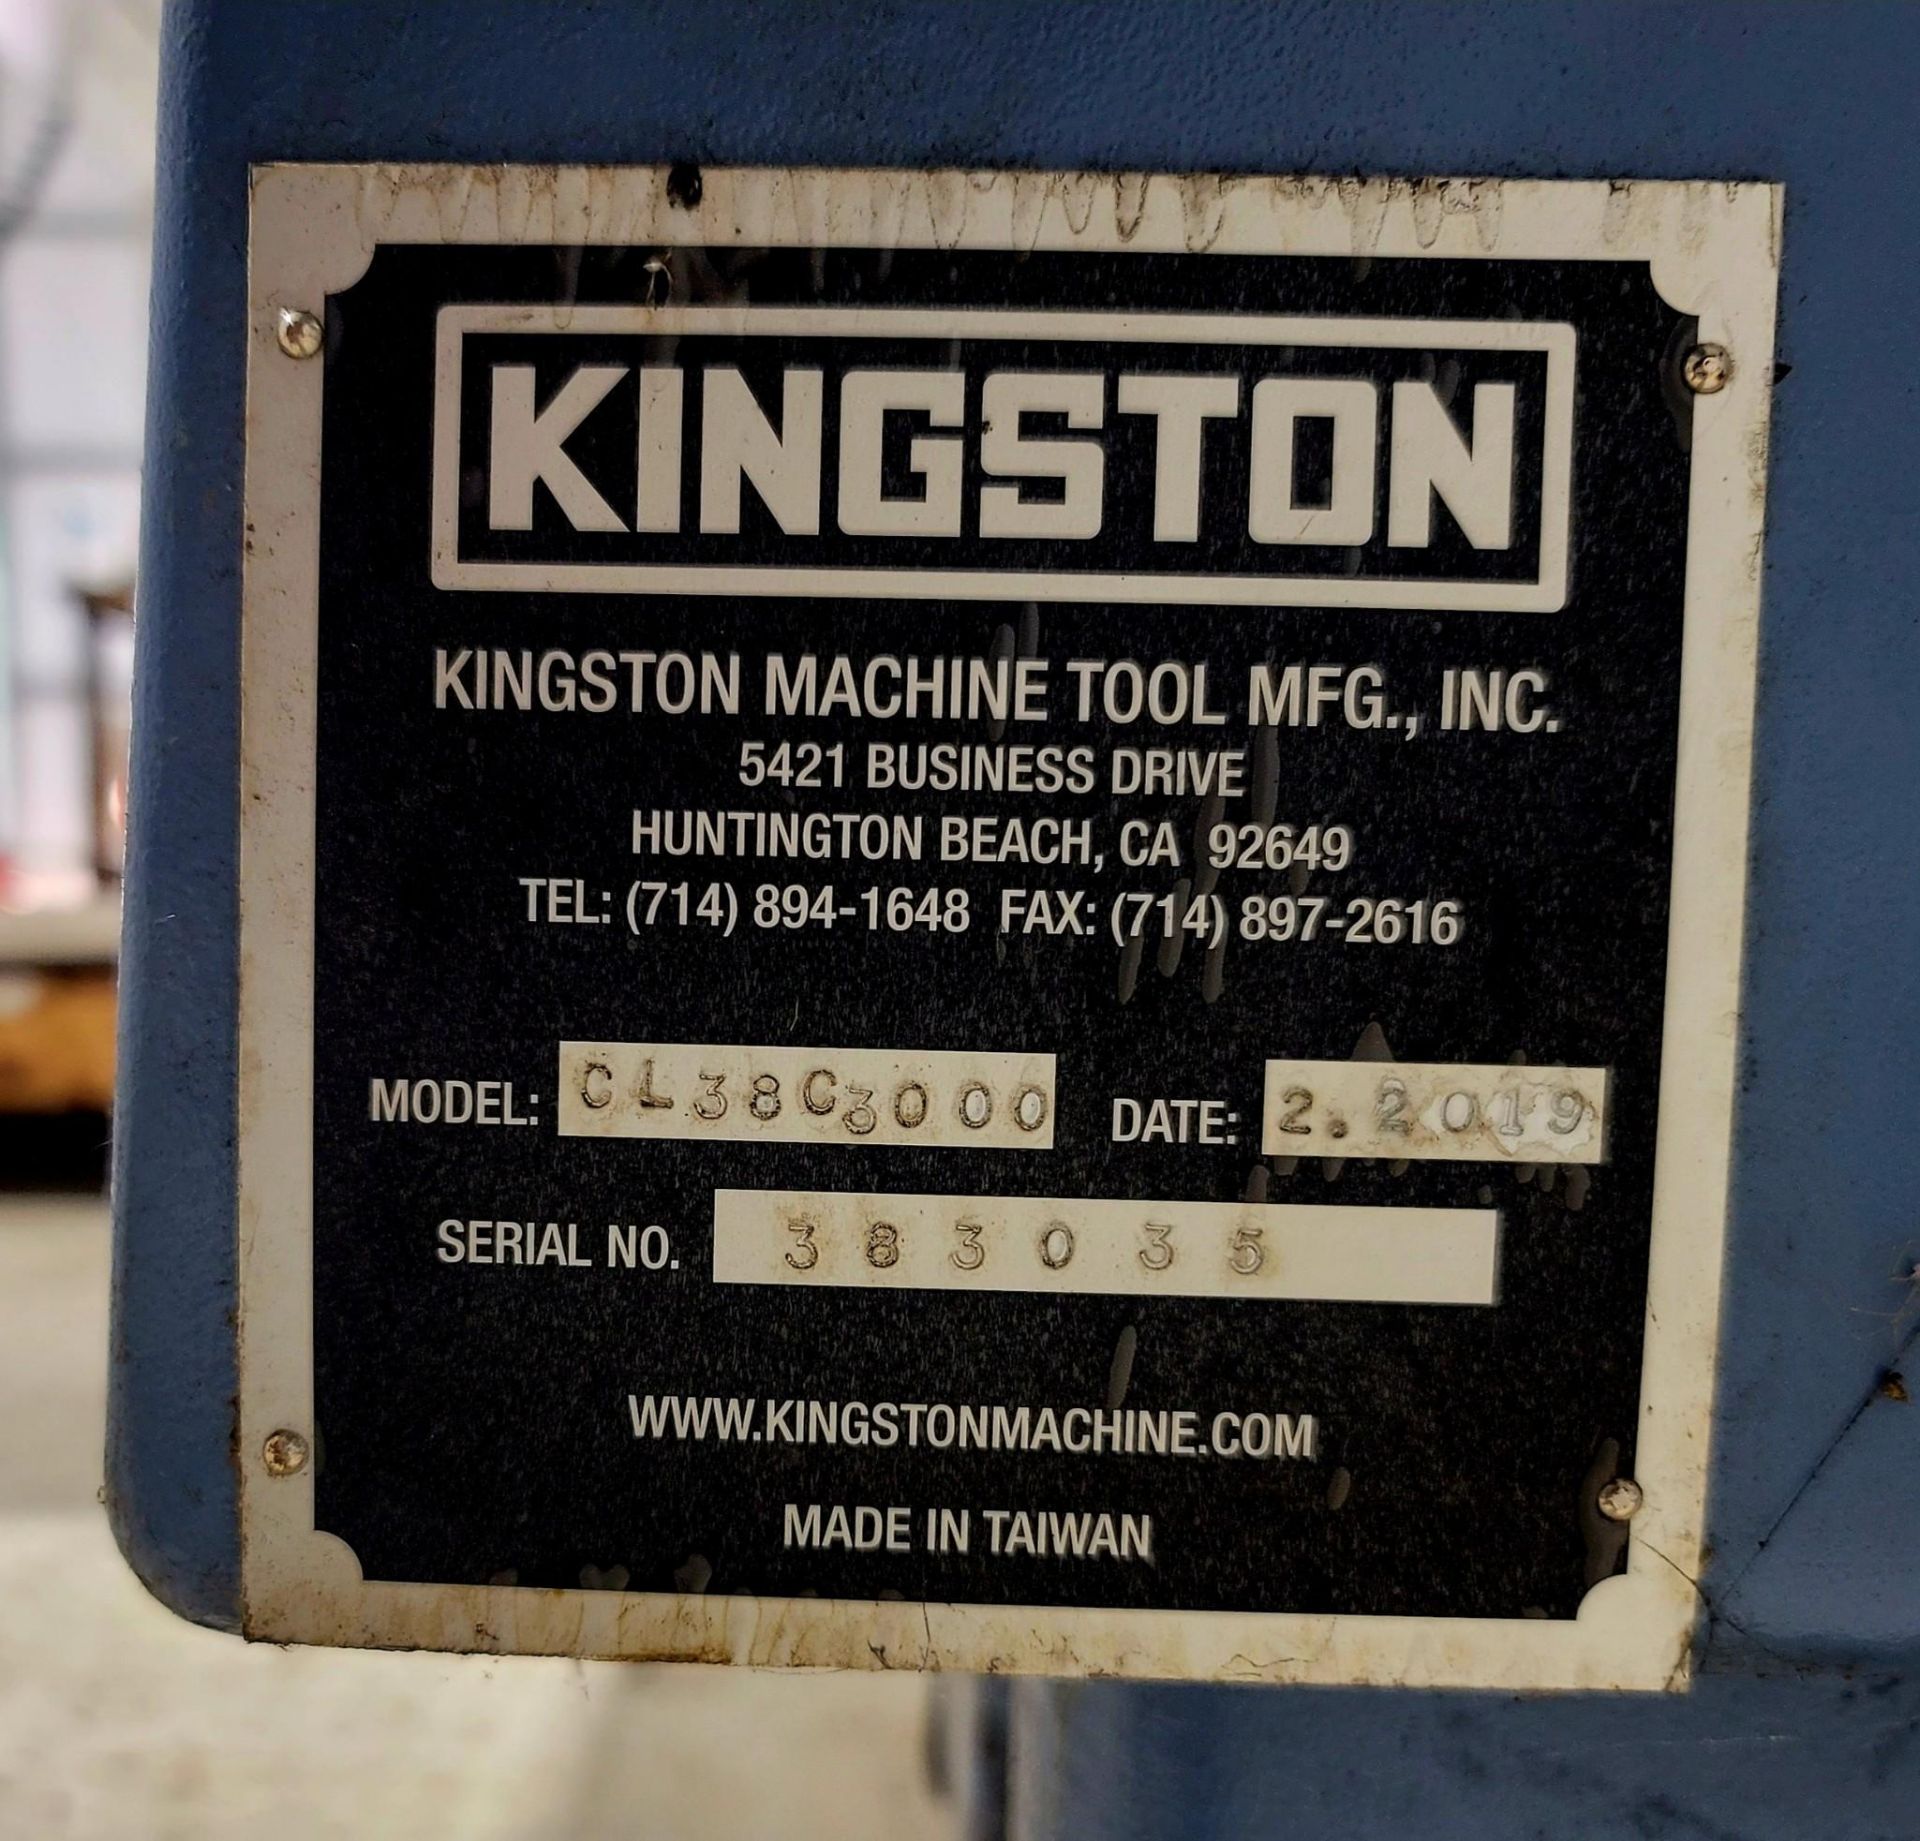 2019, Kingston CNC lathe Model CL38C 3000, S/N 303035 - Image 50 of 51